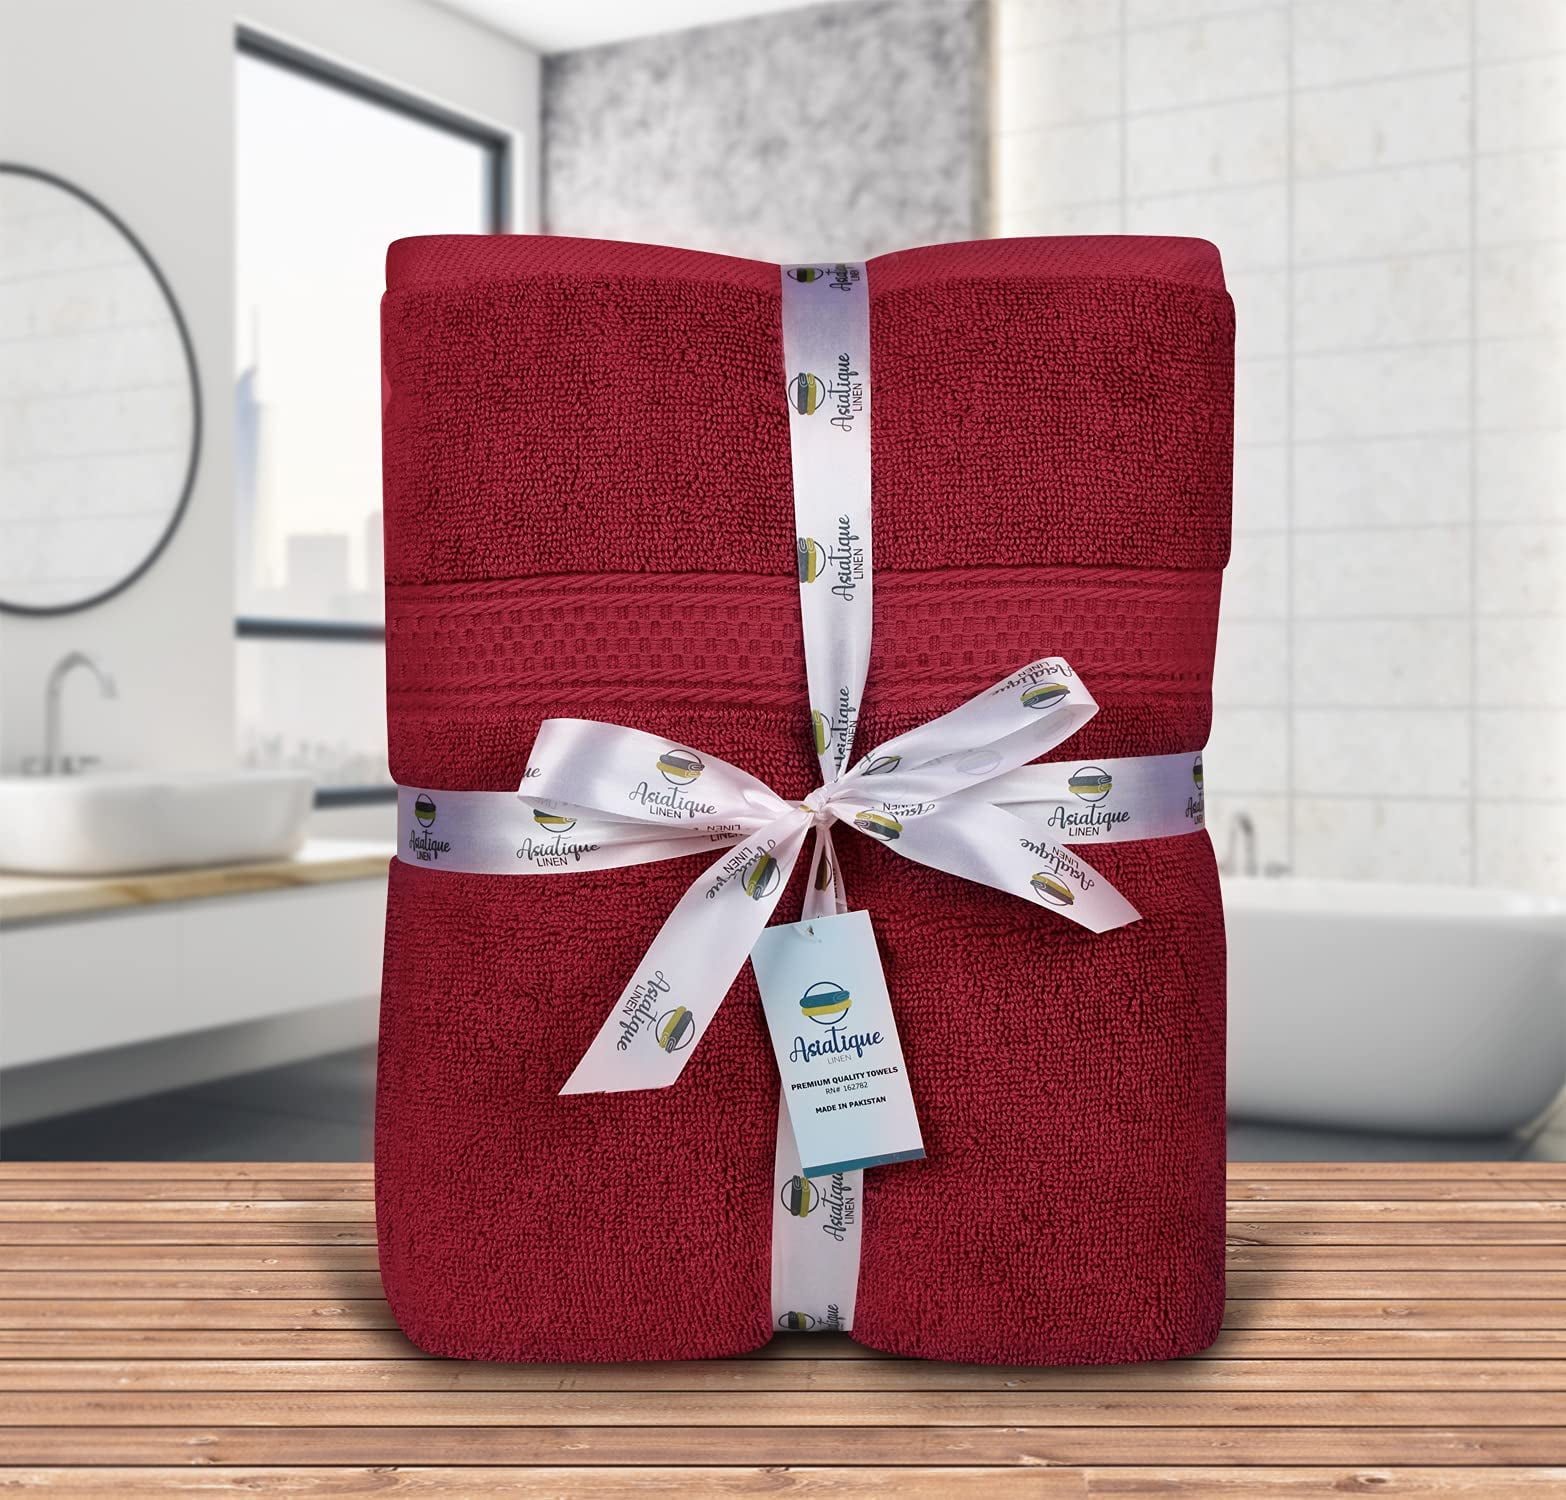 Asiatique Linen – Luxury 650 GSM Red Wine Stripes Large Bath Towels – 27x54  (4 Pack) Towels for Bathroom 